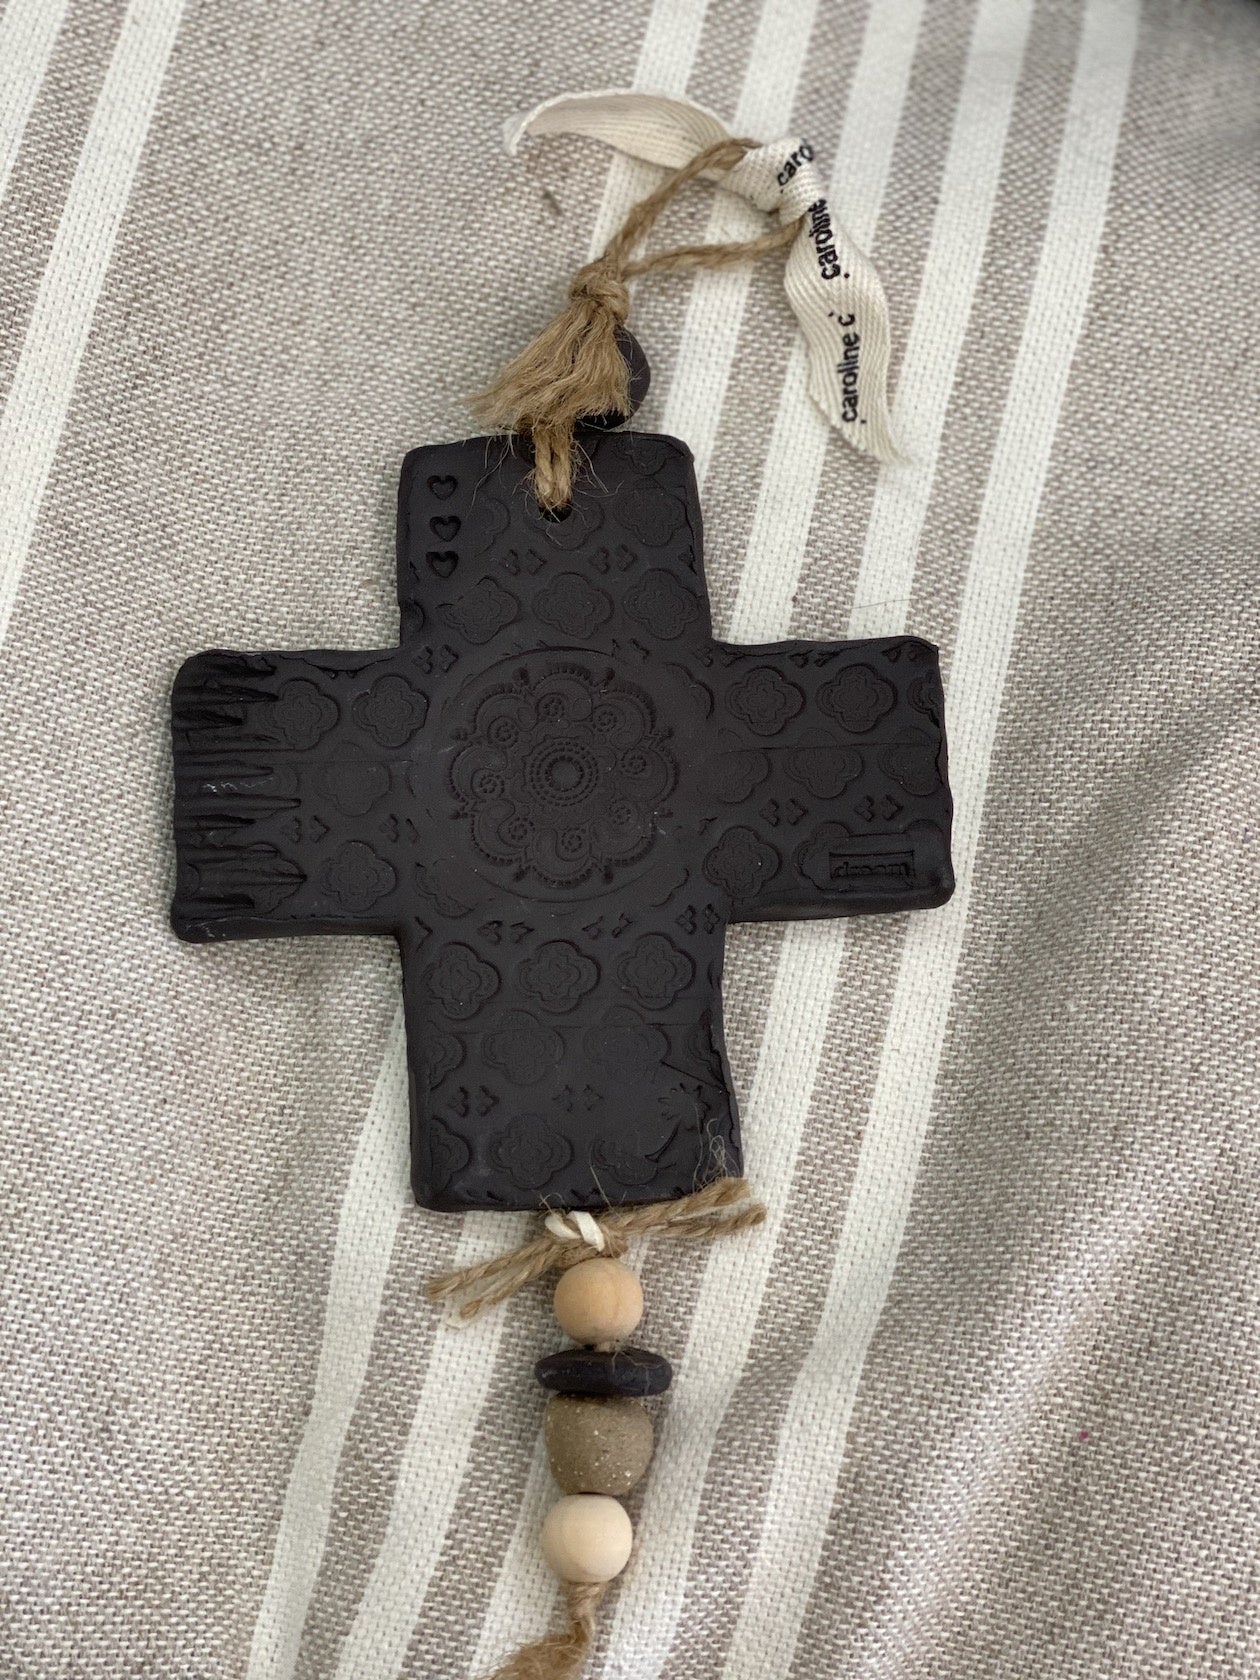 Handmade Ceramic Cross with imprinted pattern